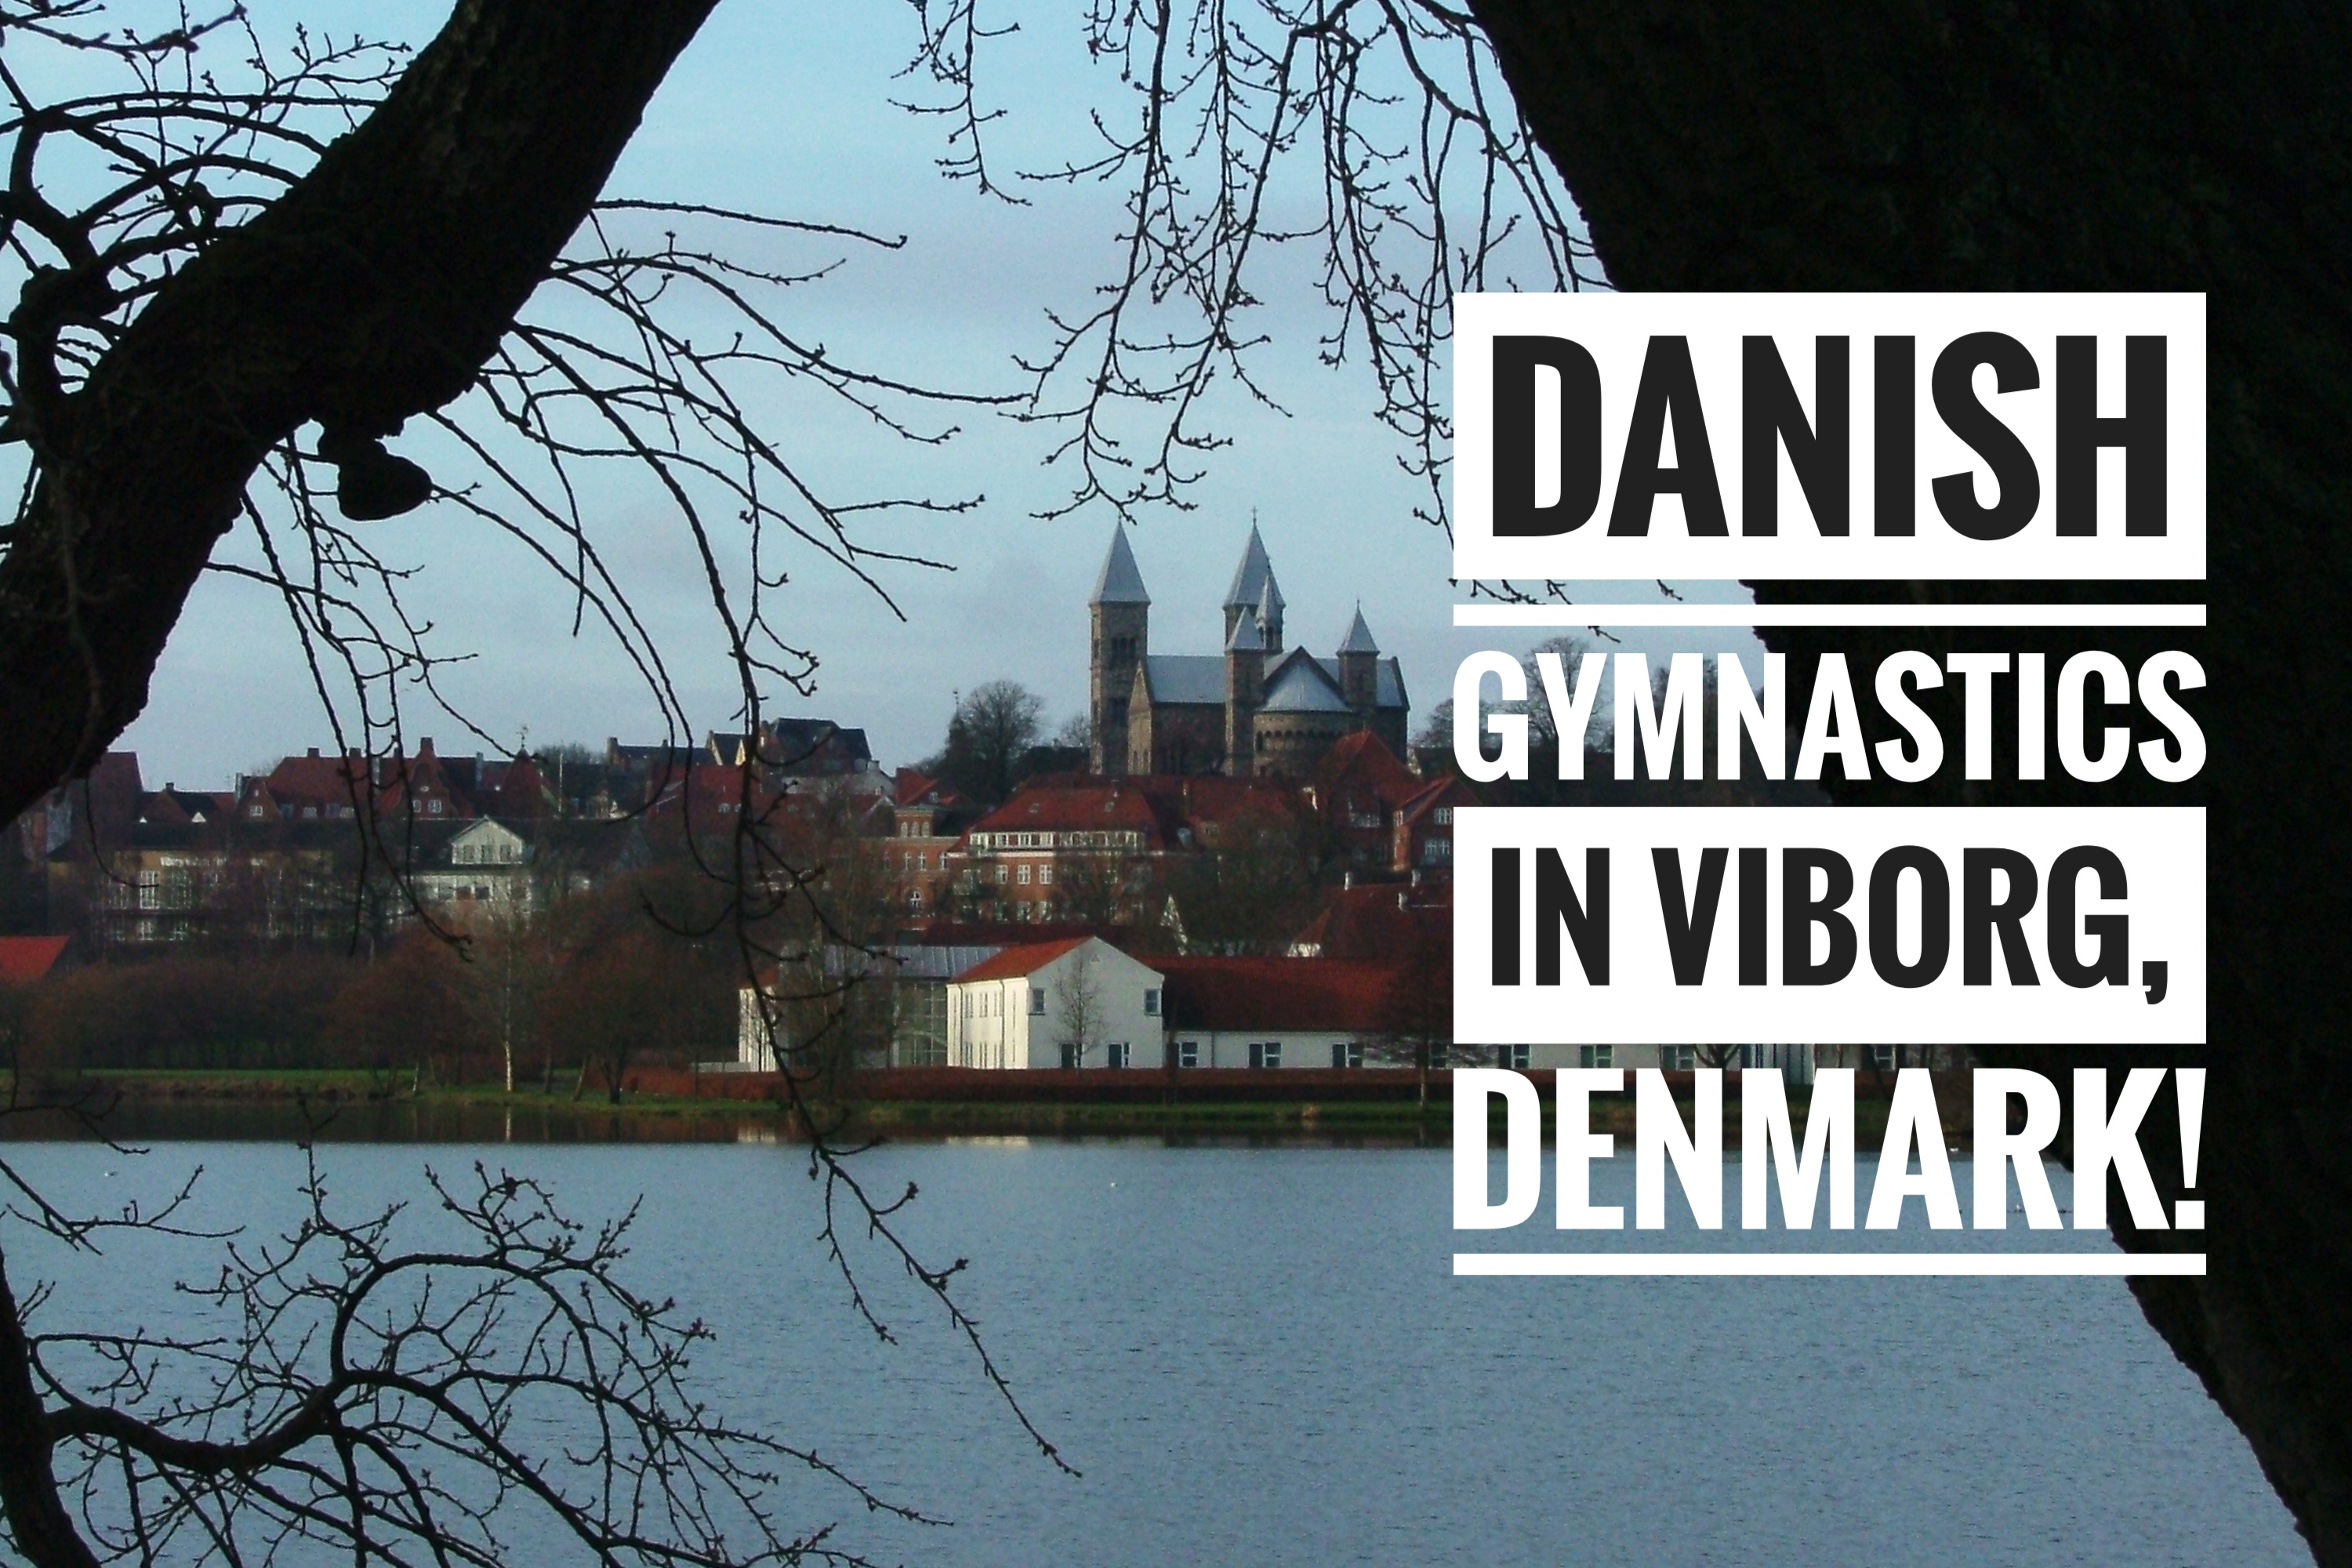 Danish Gymnastics in Viborg, Denmark!